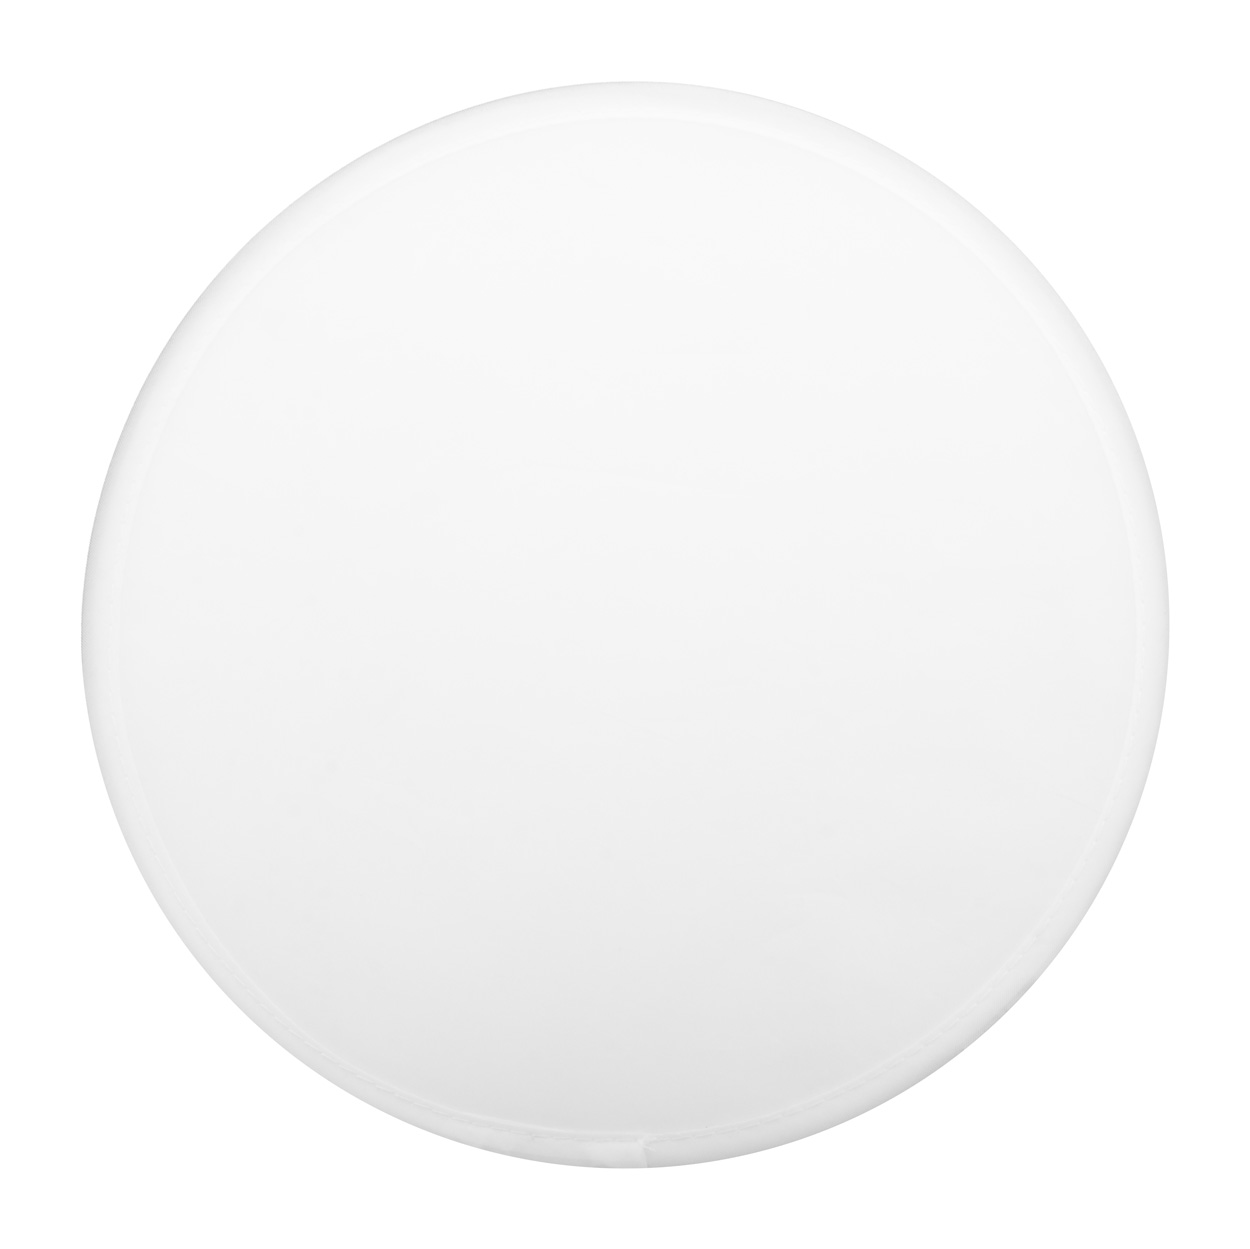 Rocket RPET frisbee - white